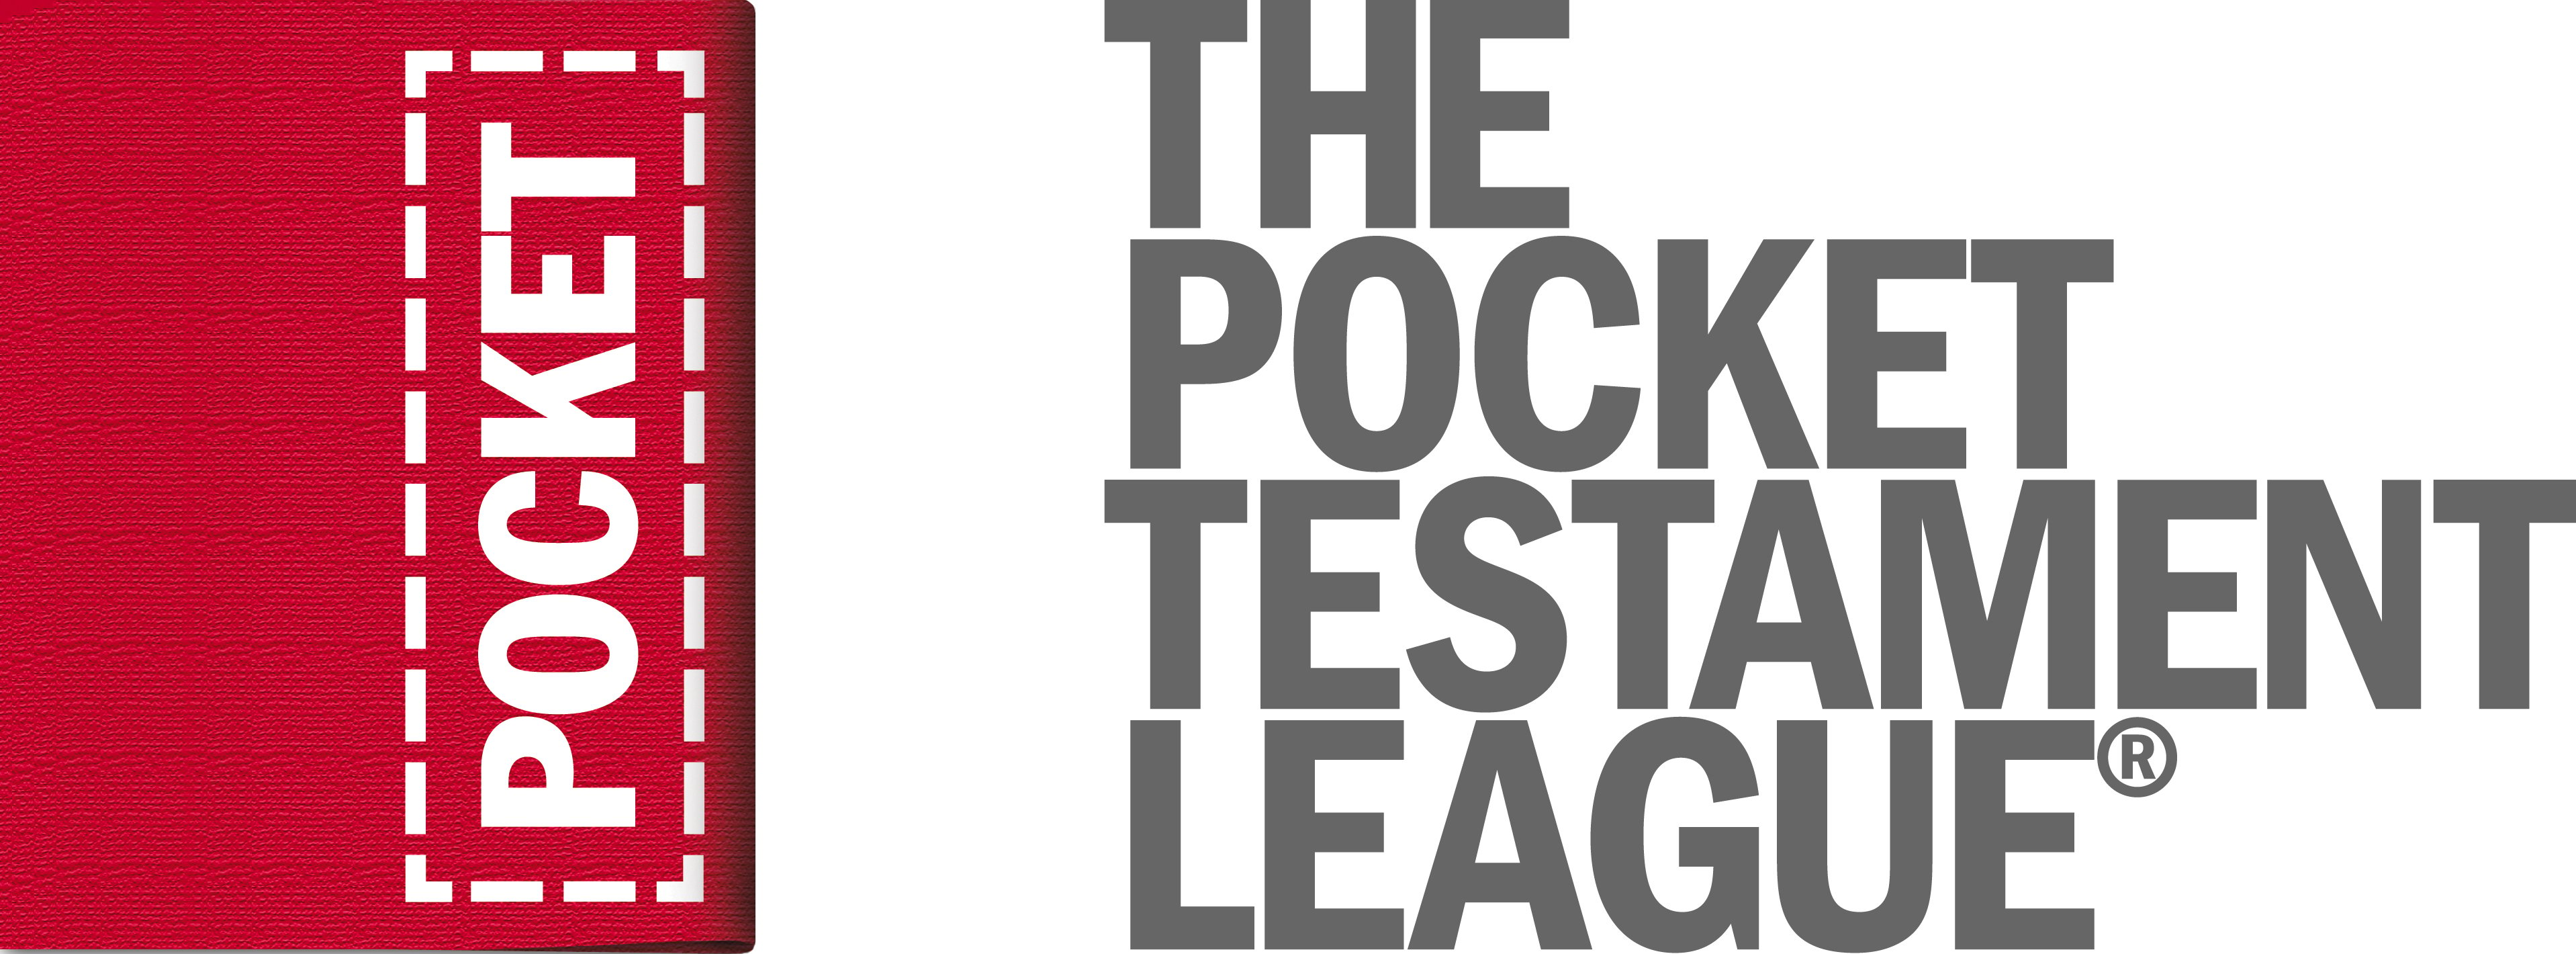 Pocket Testament League